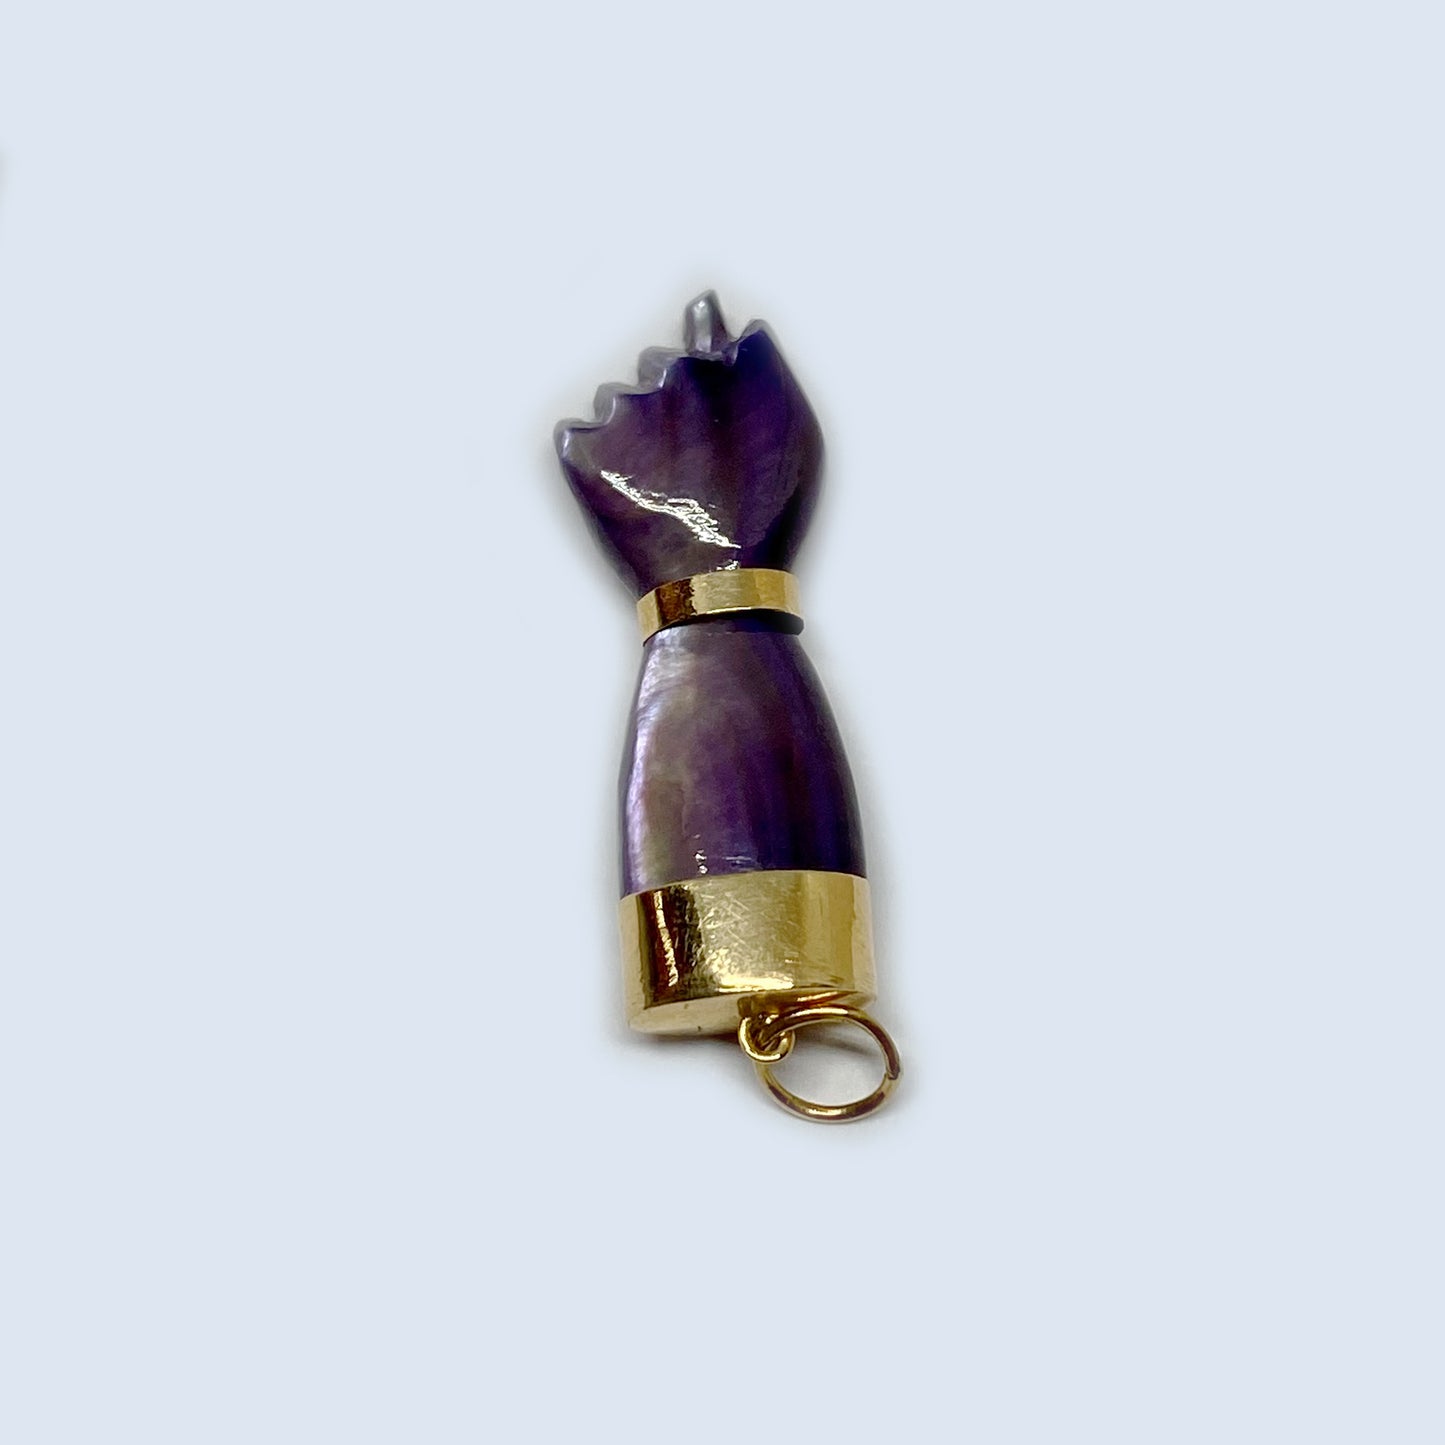 Antique 14k Gold Abalone Purple Greyish Figa Charm